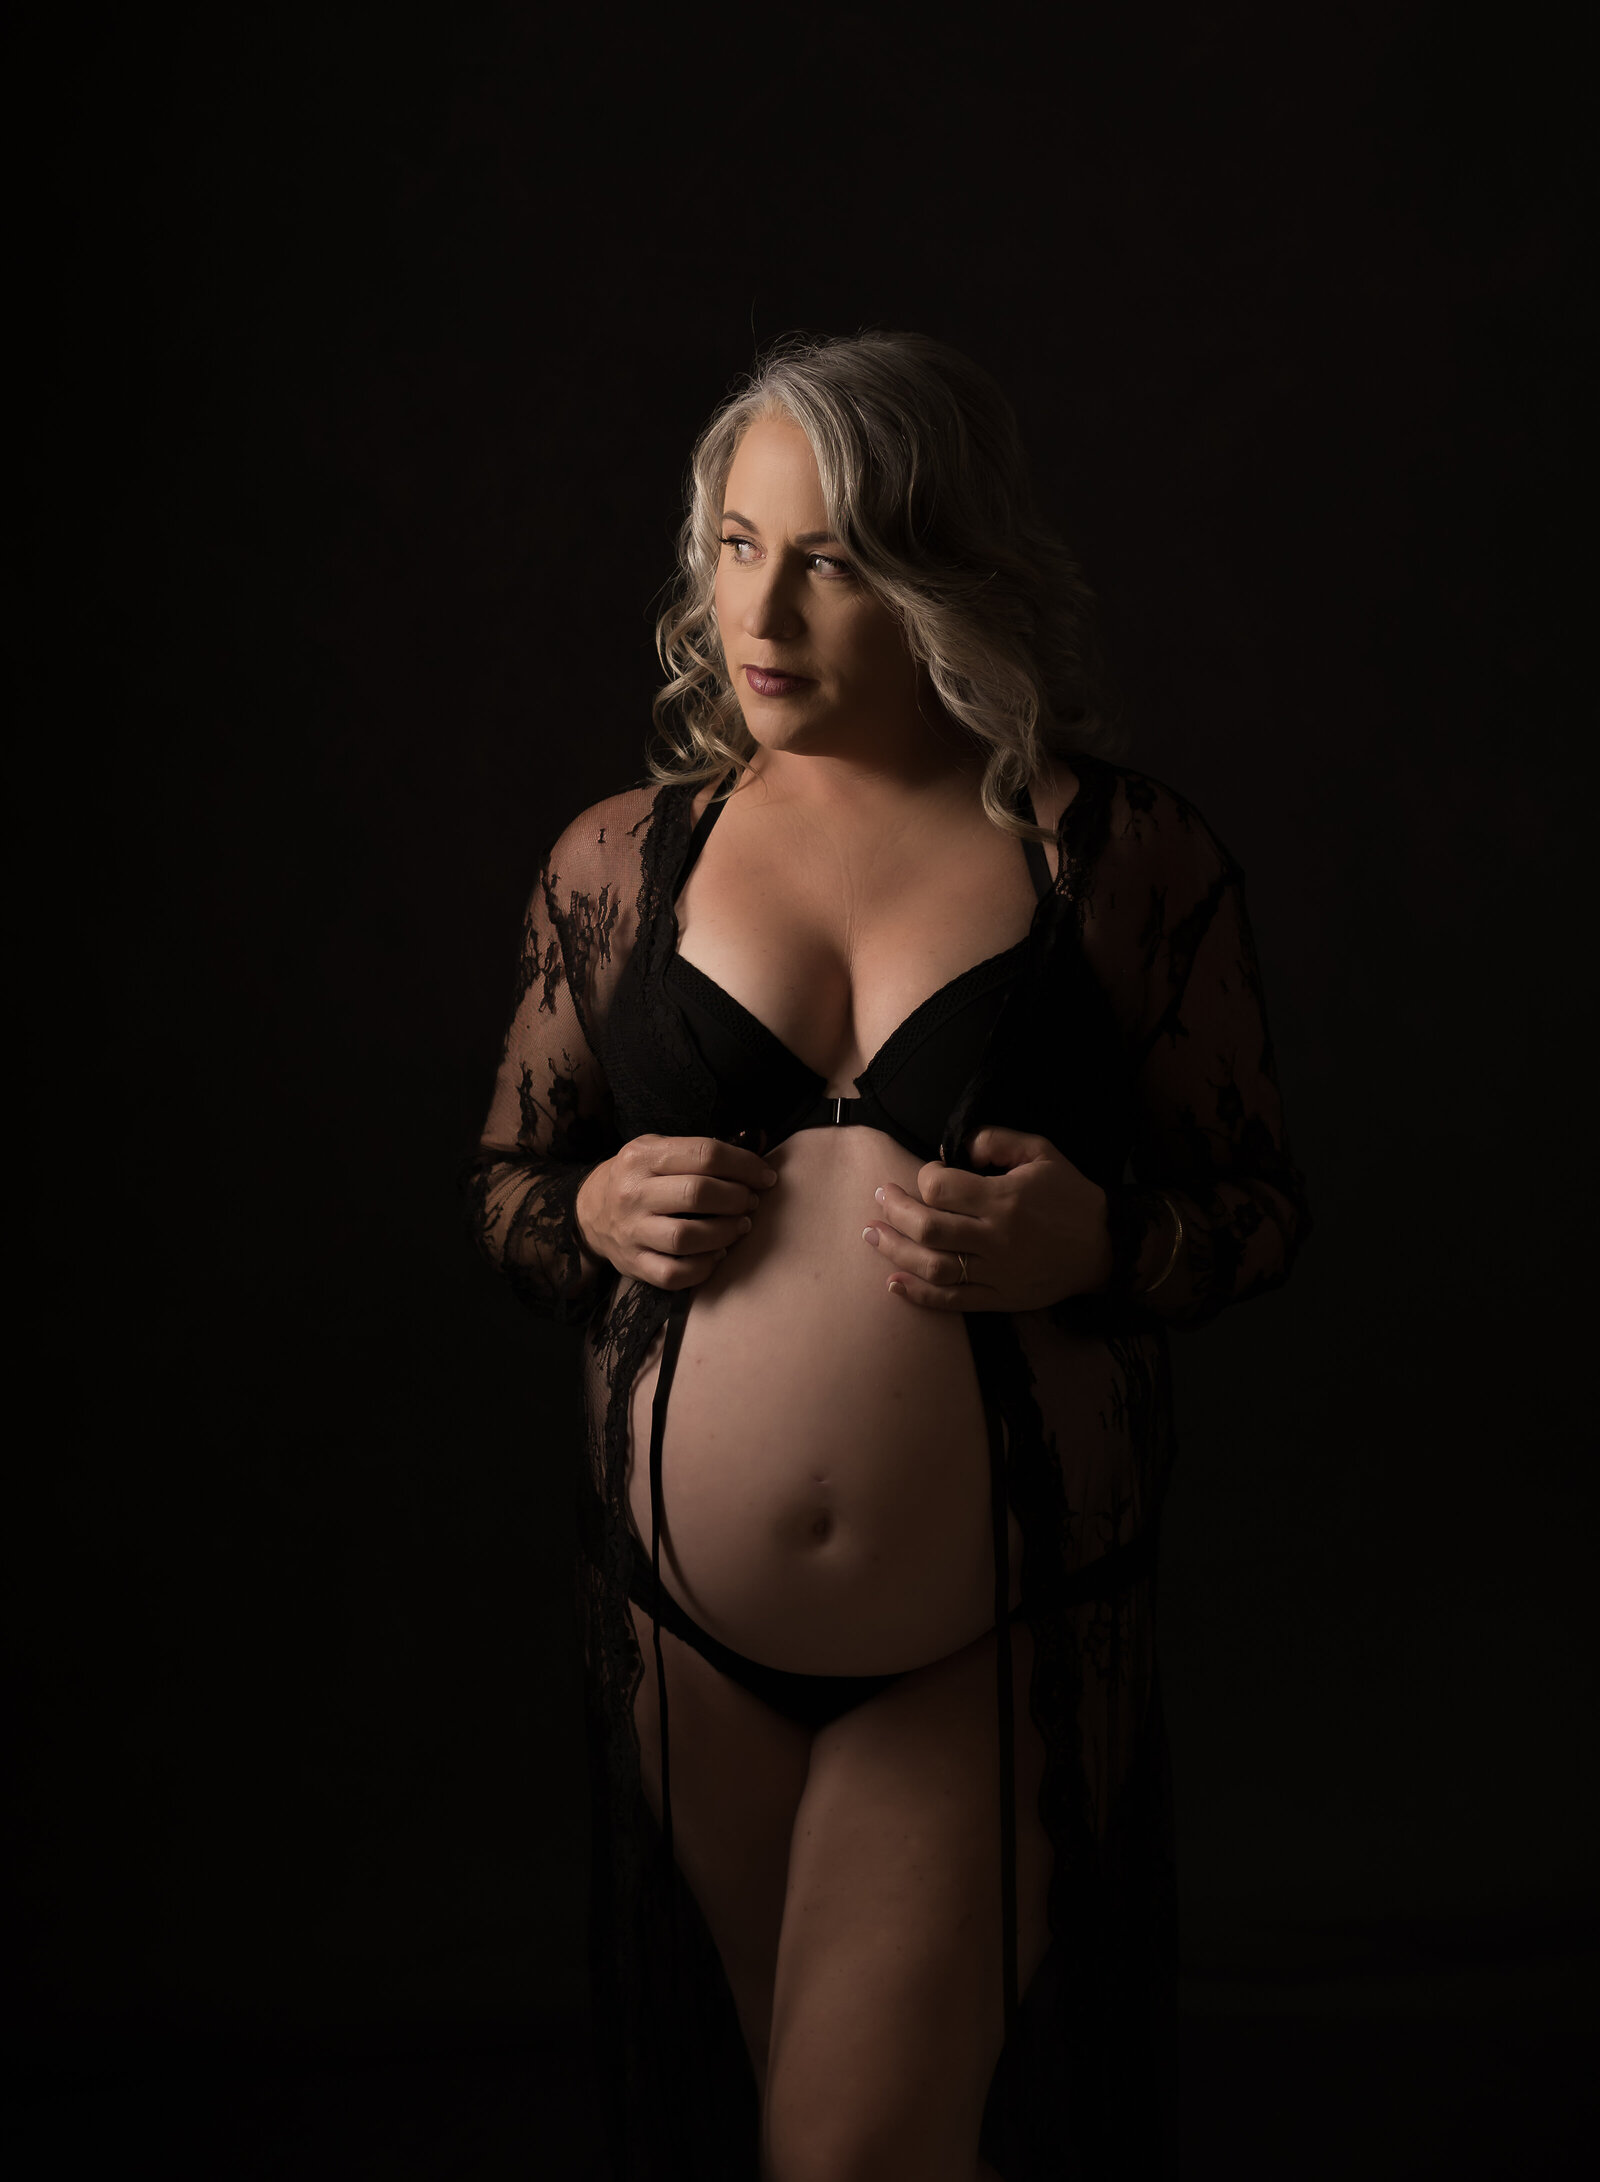 Woodstock maternity photographer